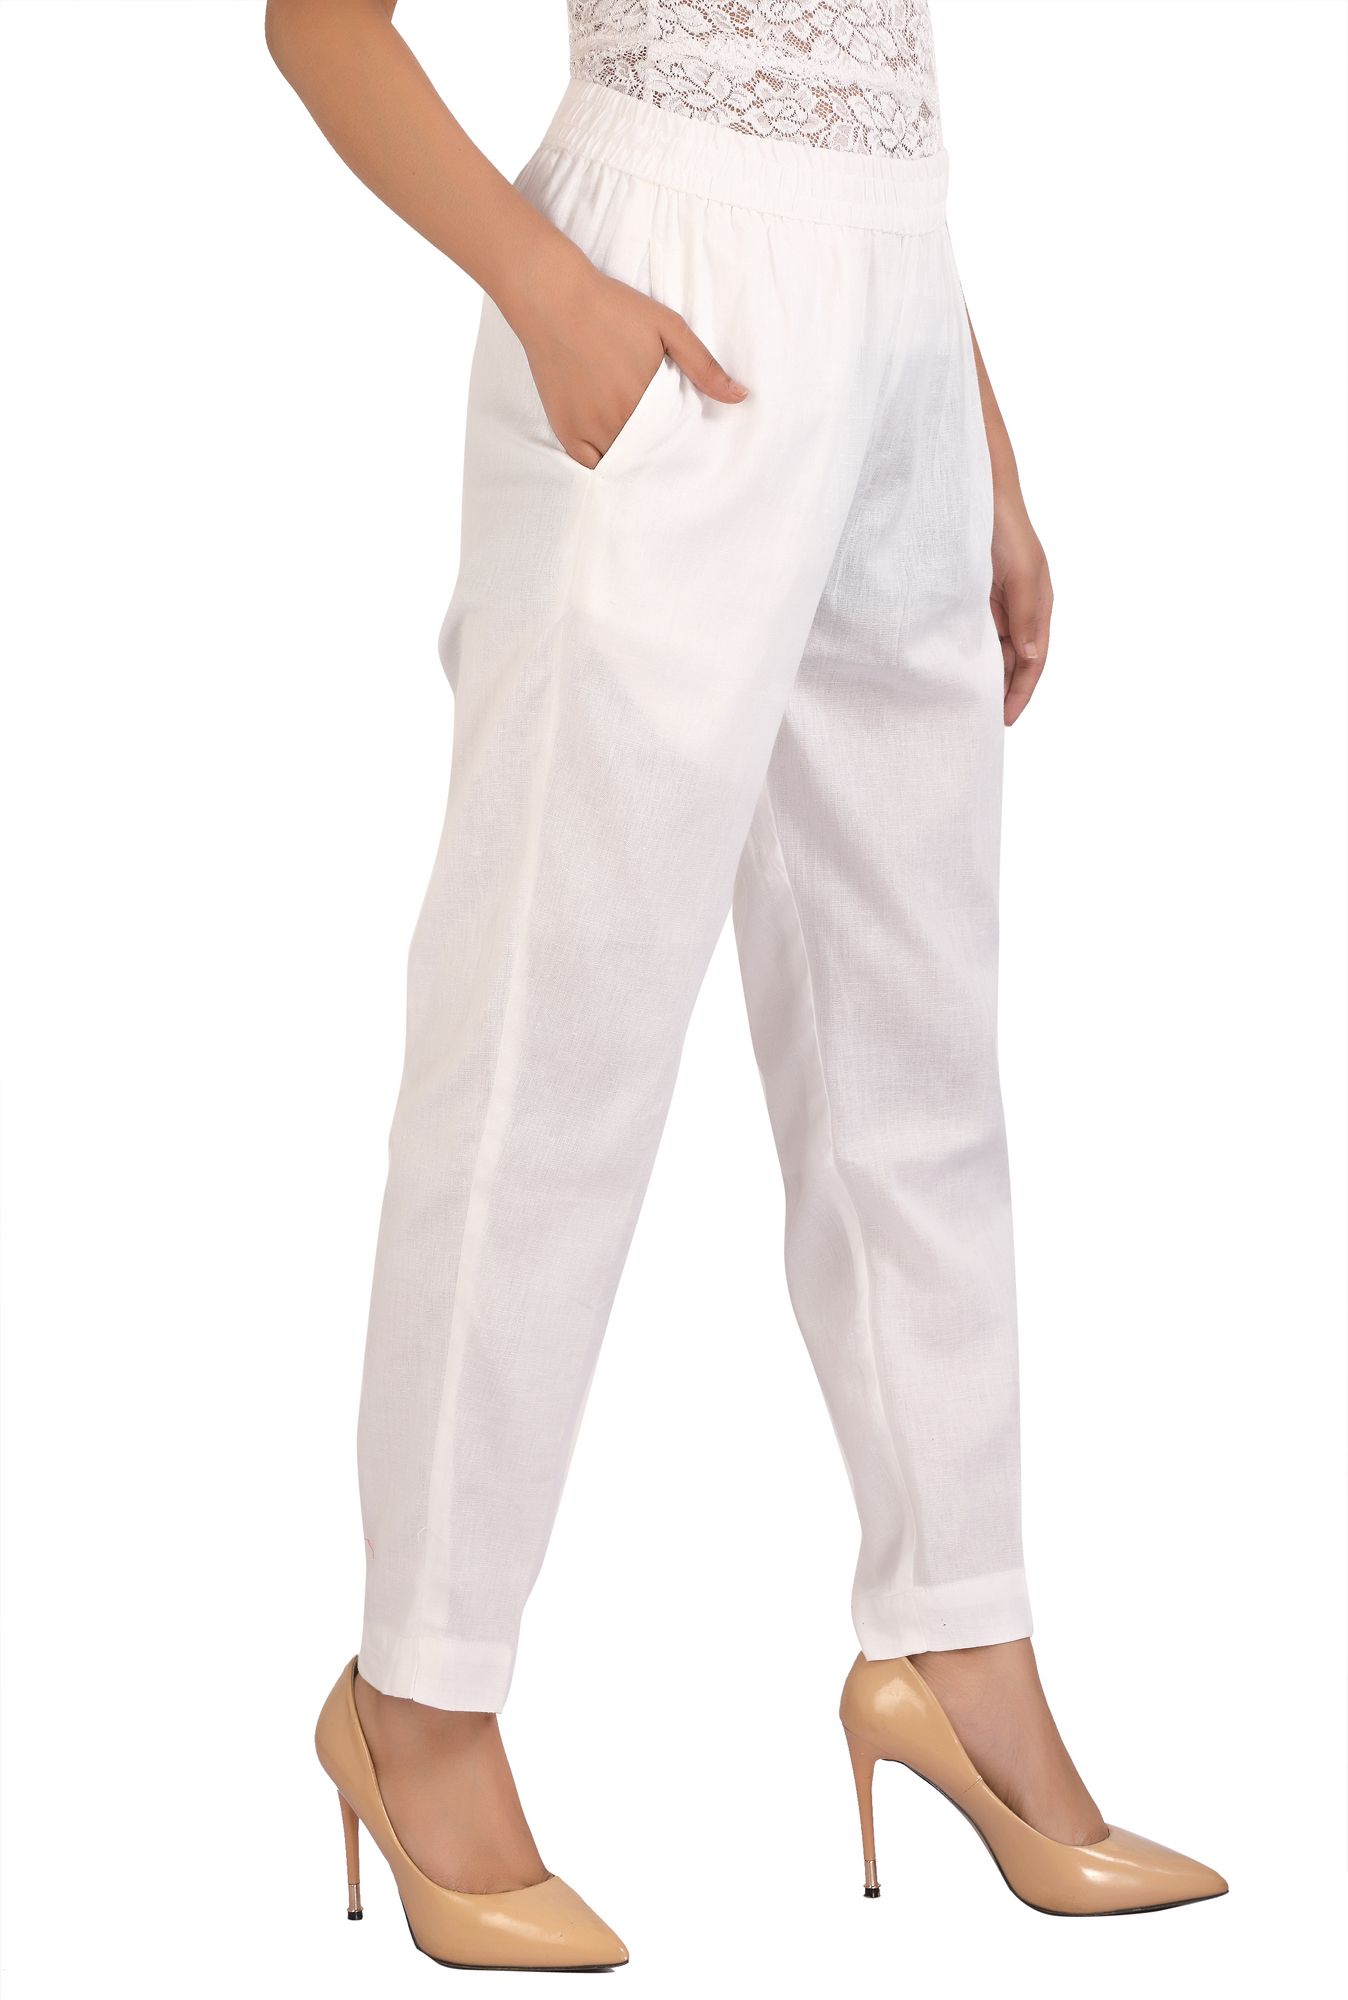 Women's White Cotton Pant